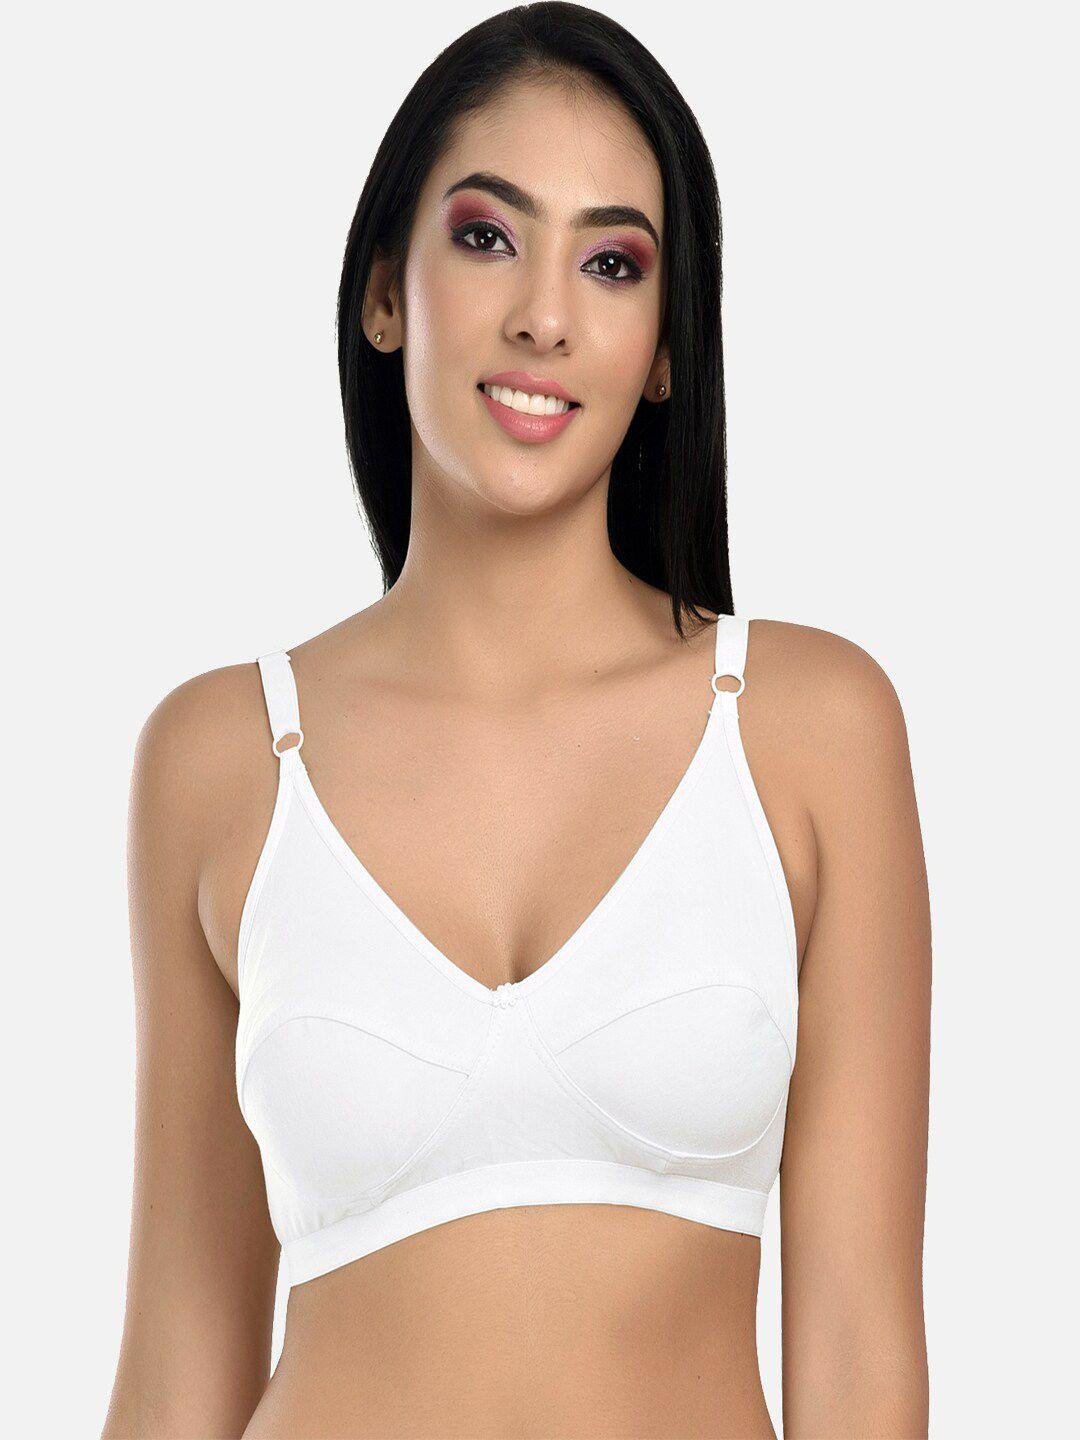 styfun white bra